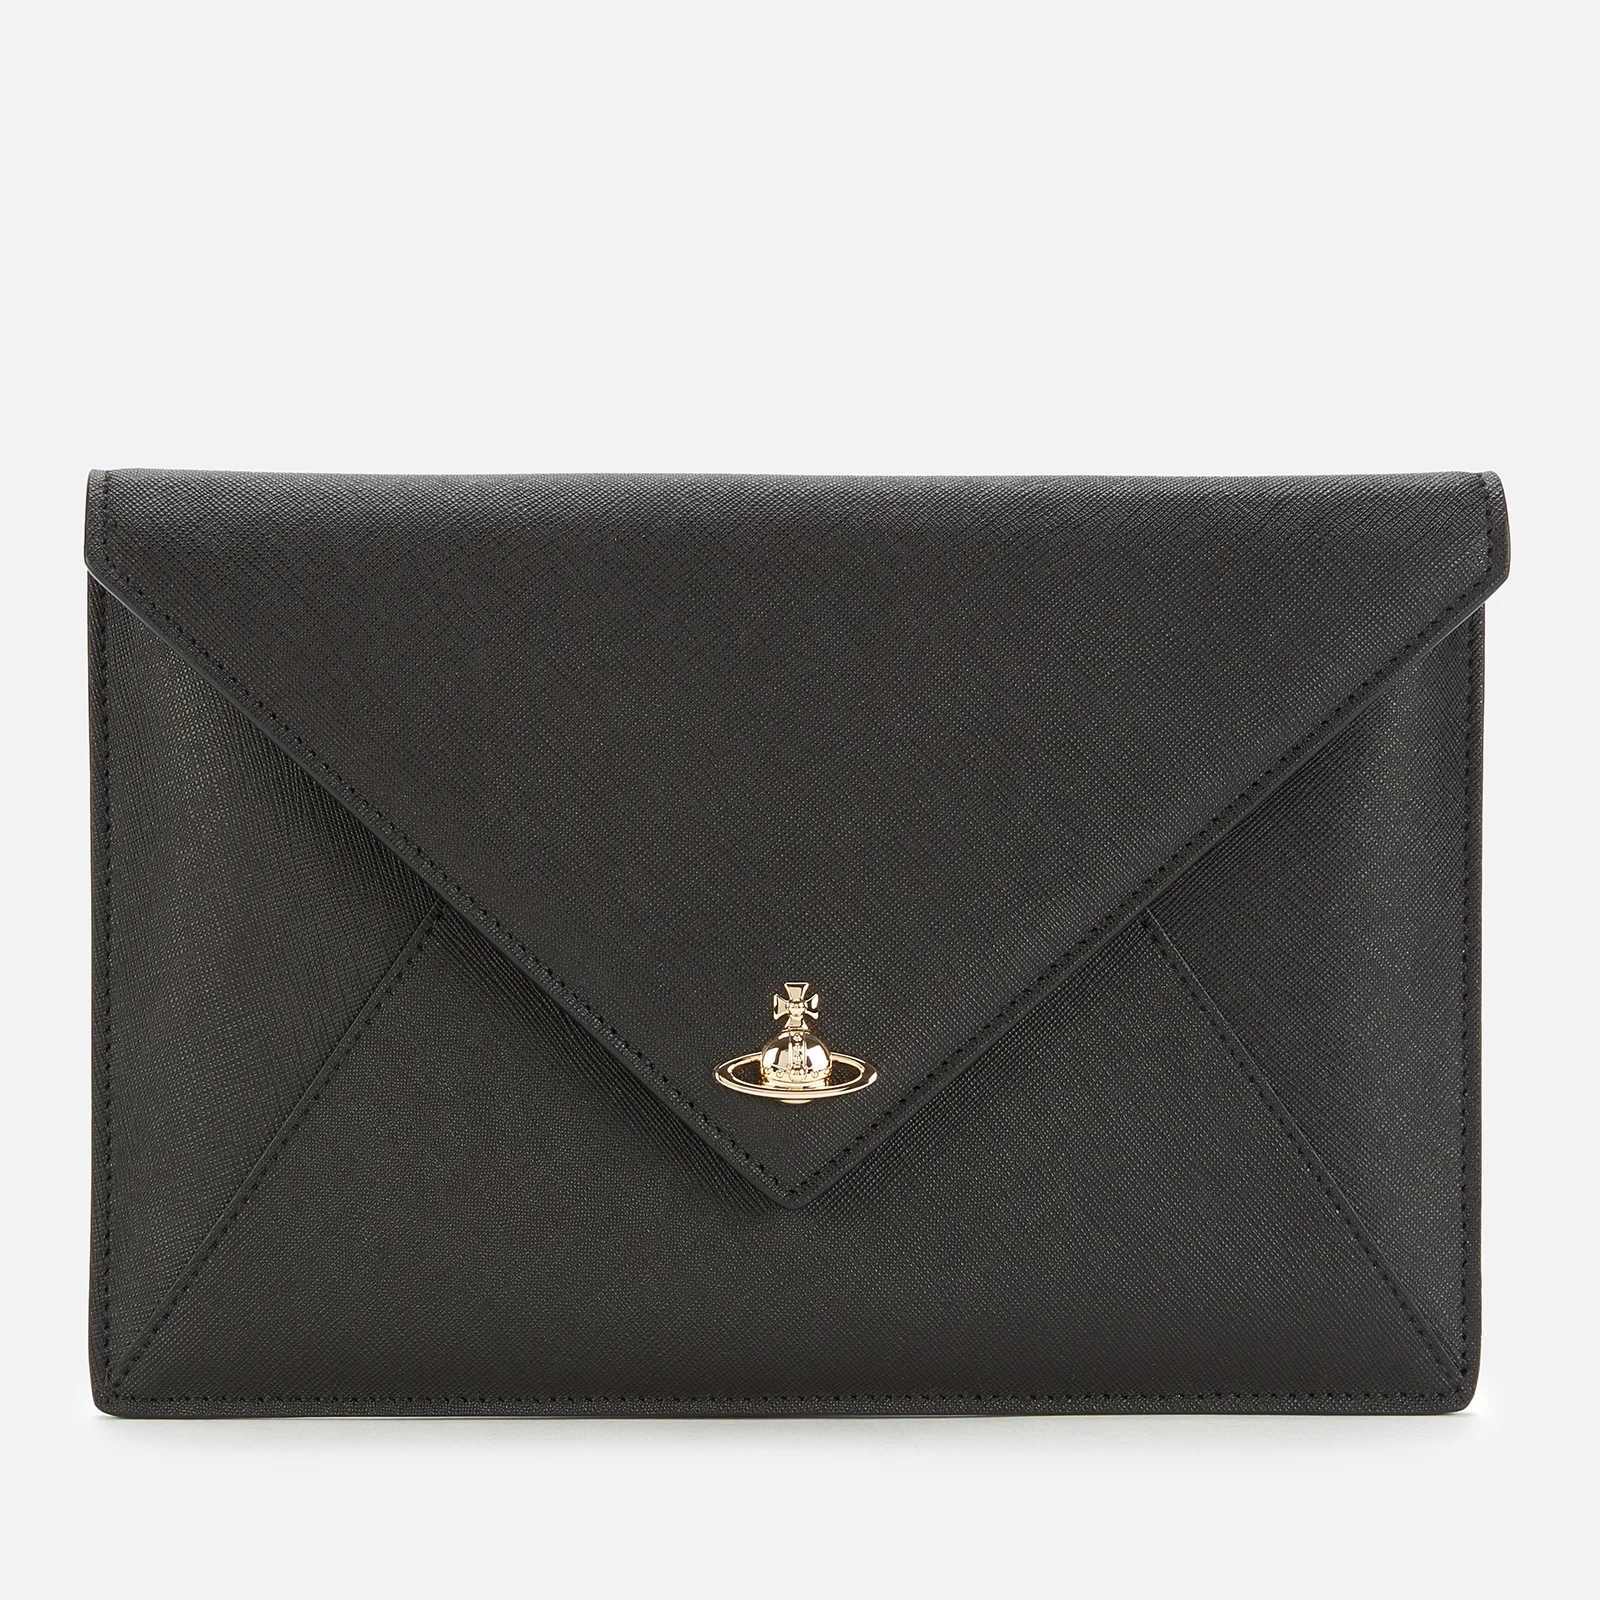 Vivienne Westwood Women's Victoria Envelope Clutch Bag - Black Image 1